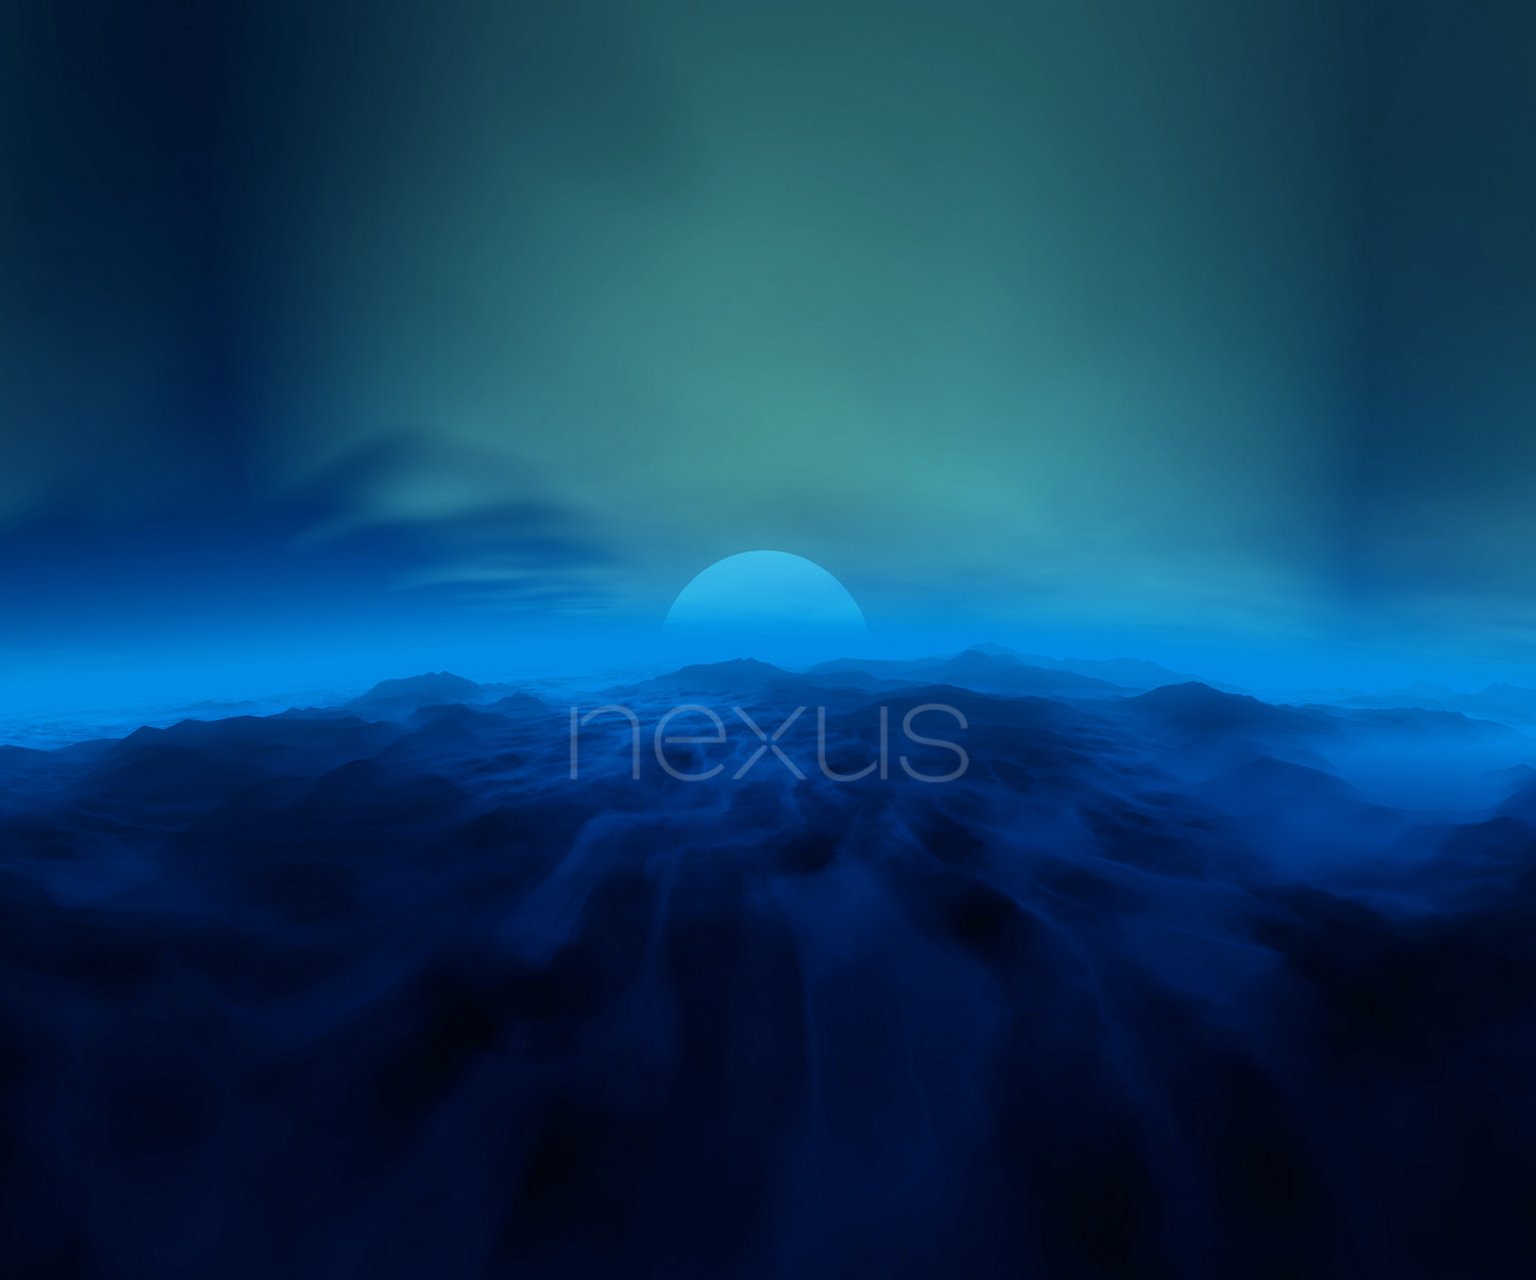 Nexus Logo Wallpaper High Resolution Desktop